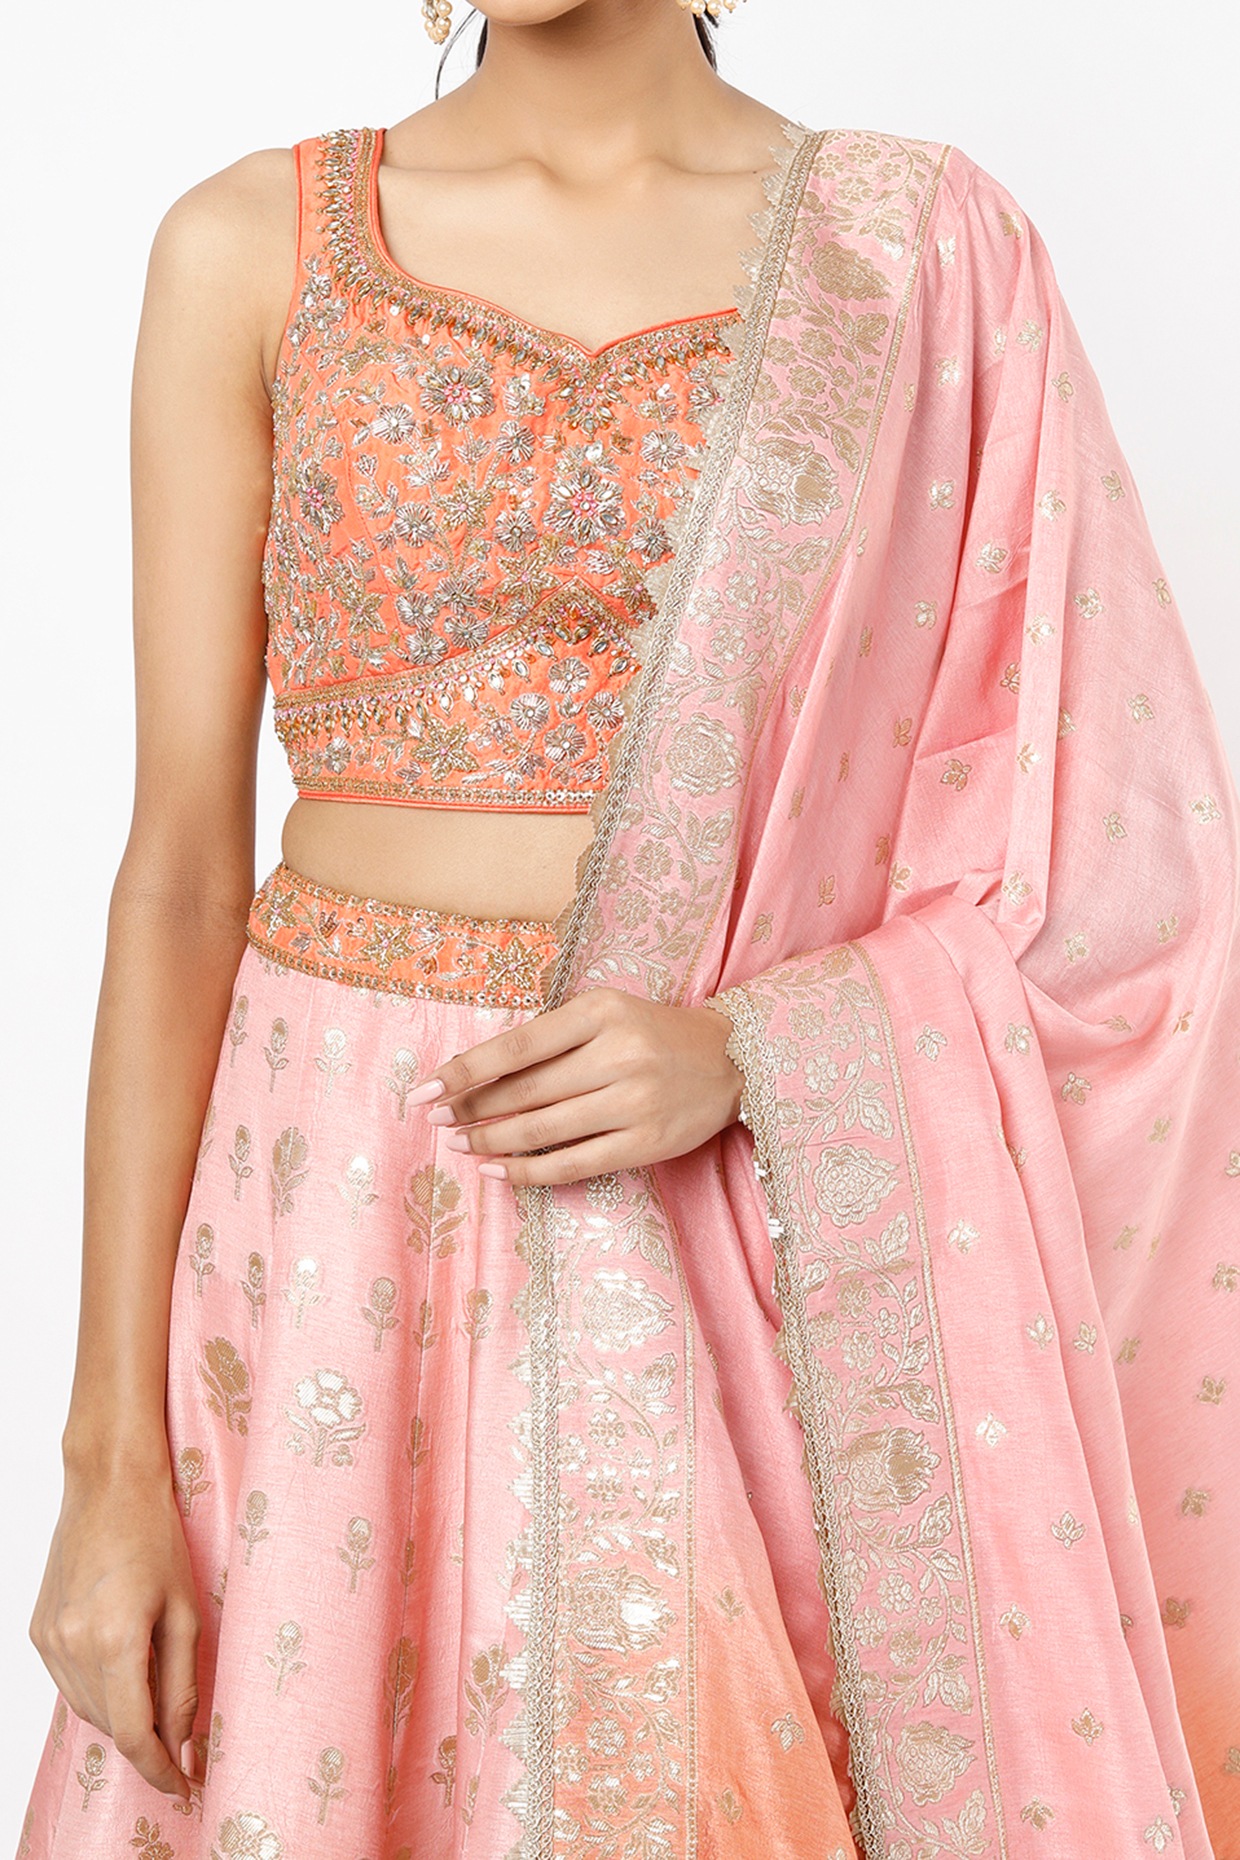 Fancy choli daman design - Sari Info | Designer lehenga choli, Choli  designs, Lehenga style saree